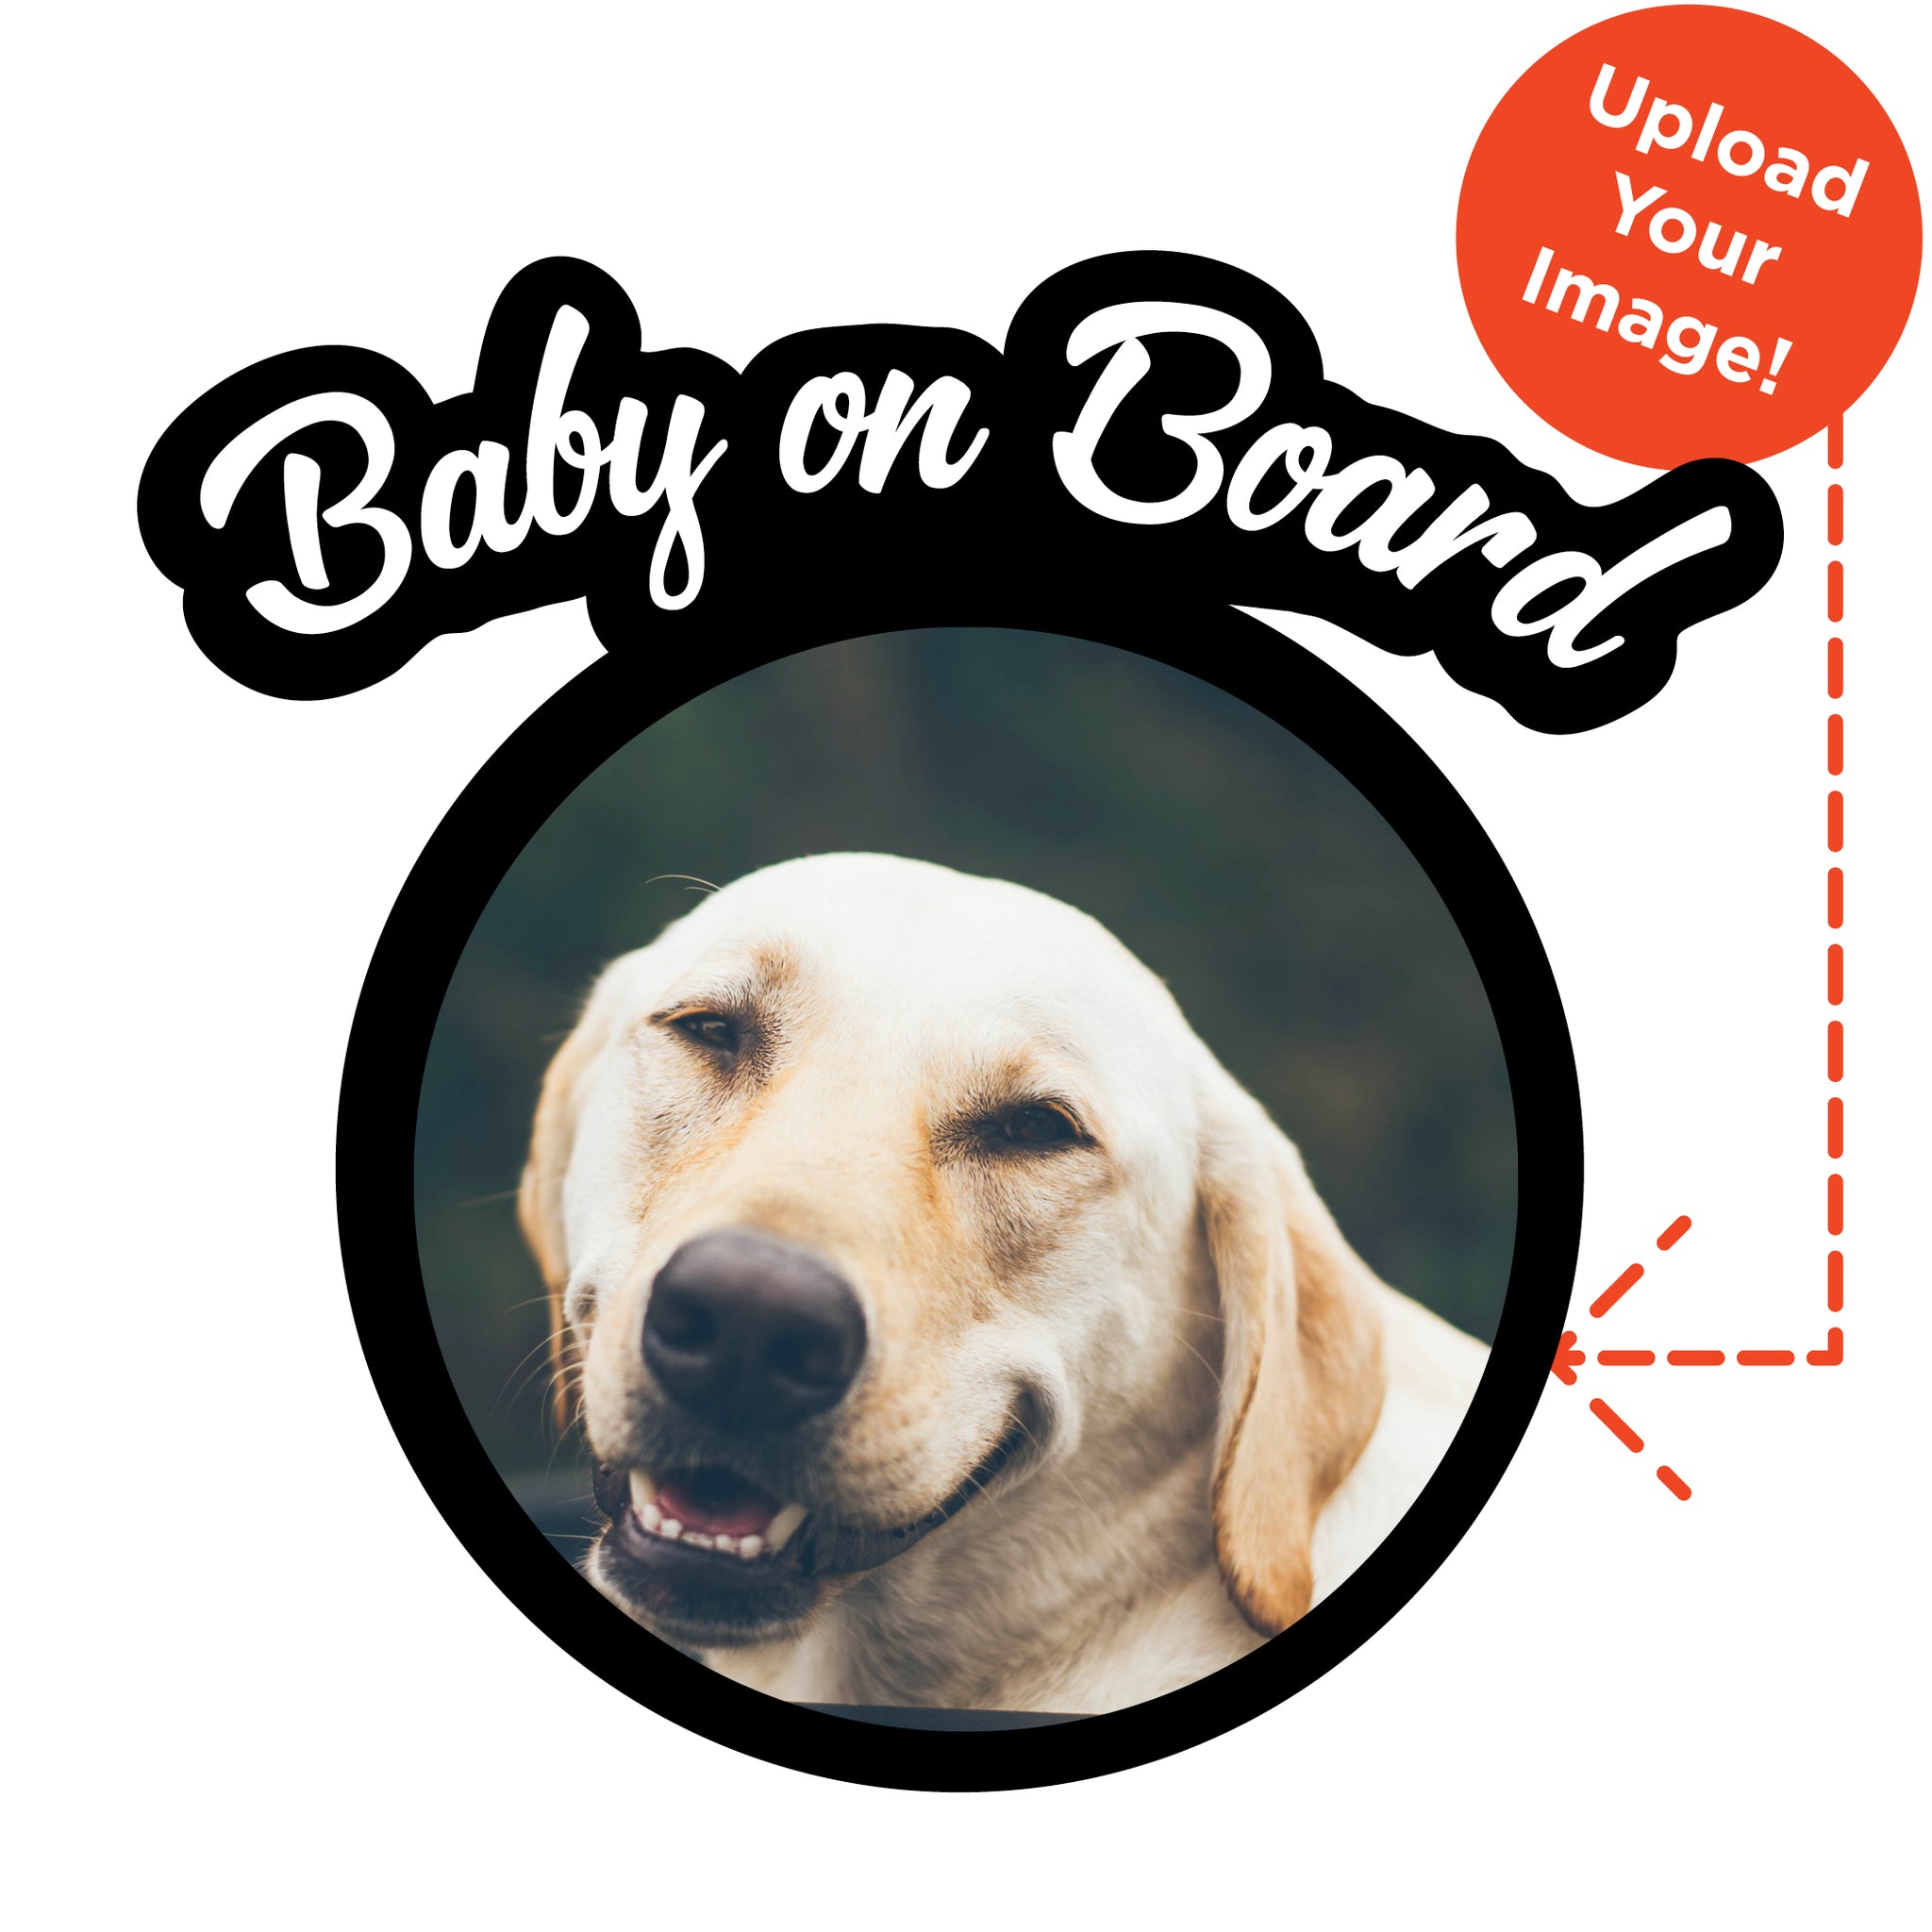 Personalized Baby on Board Sticker